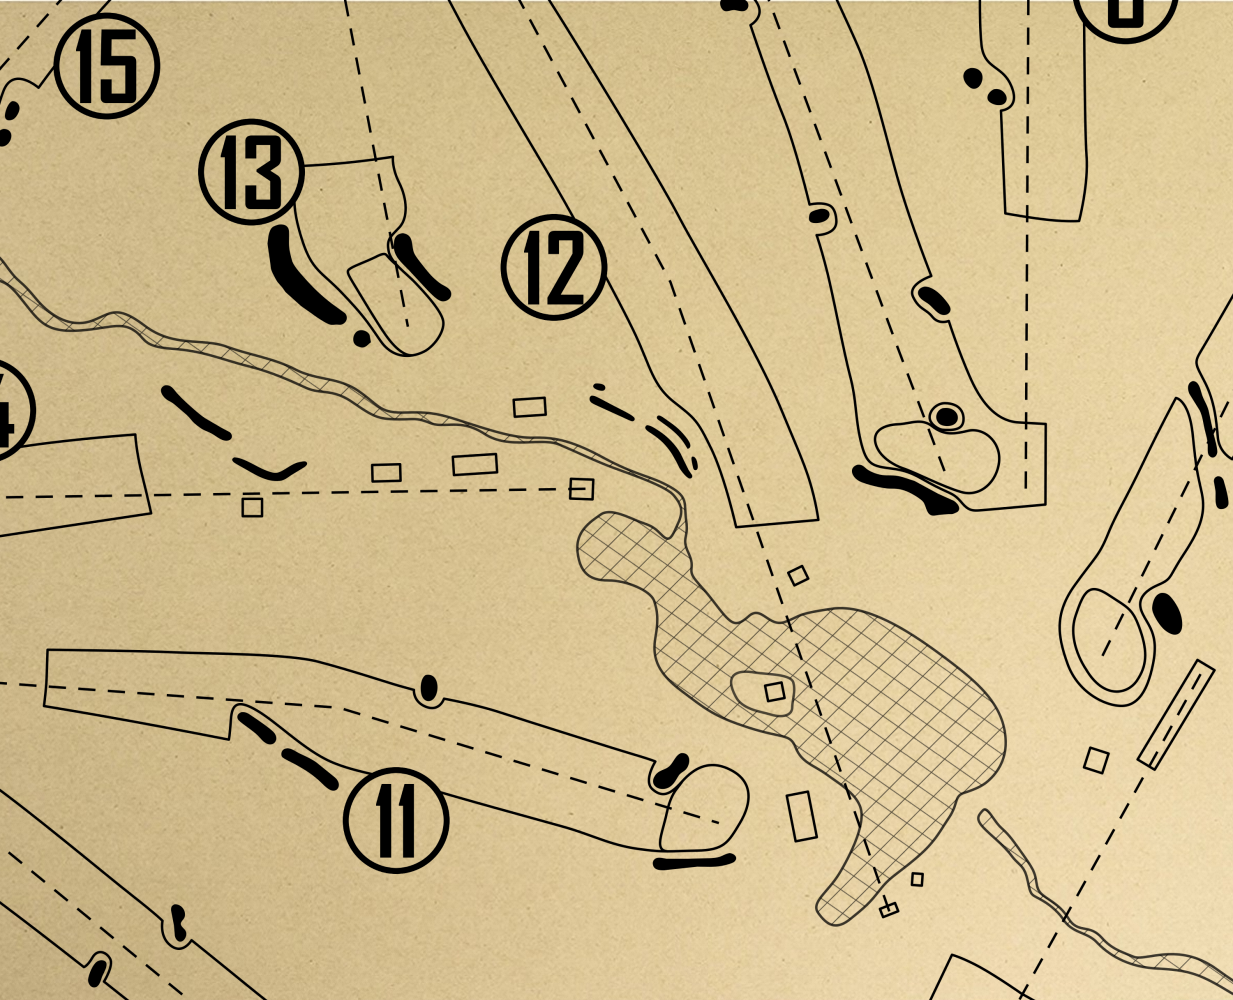 Blue Mound Golf & Country Club Outline (Print)